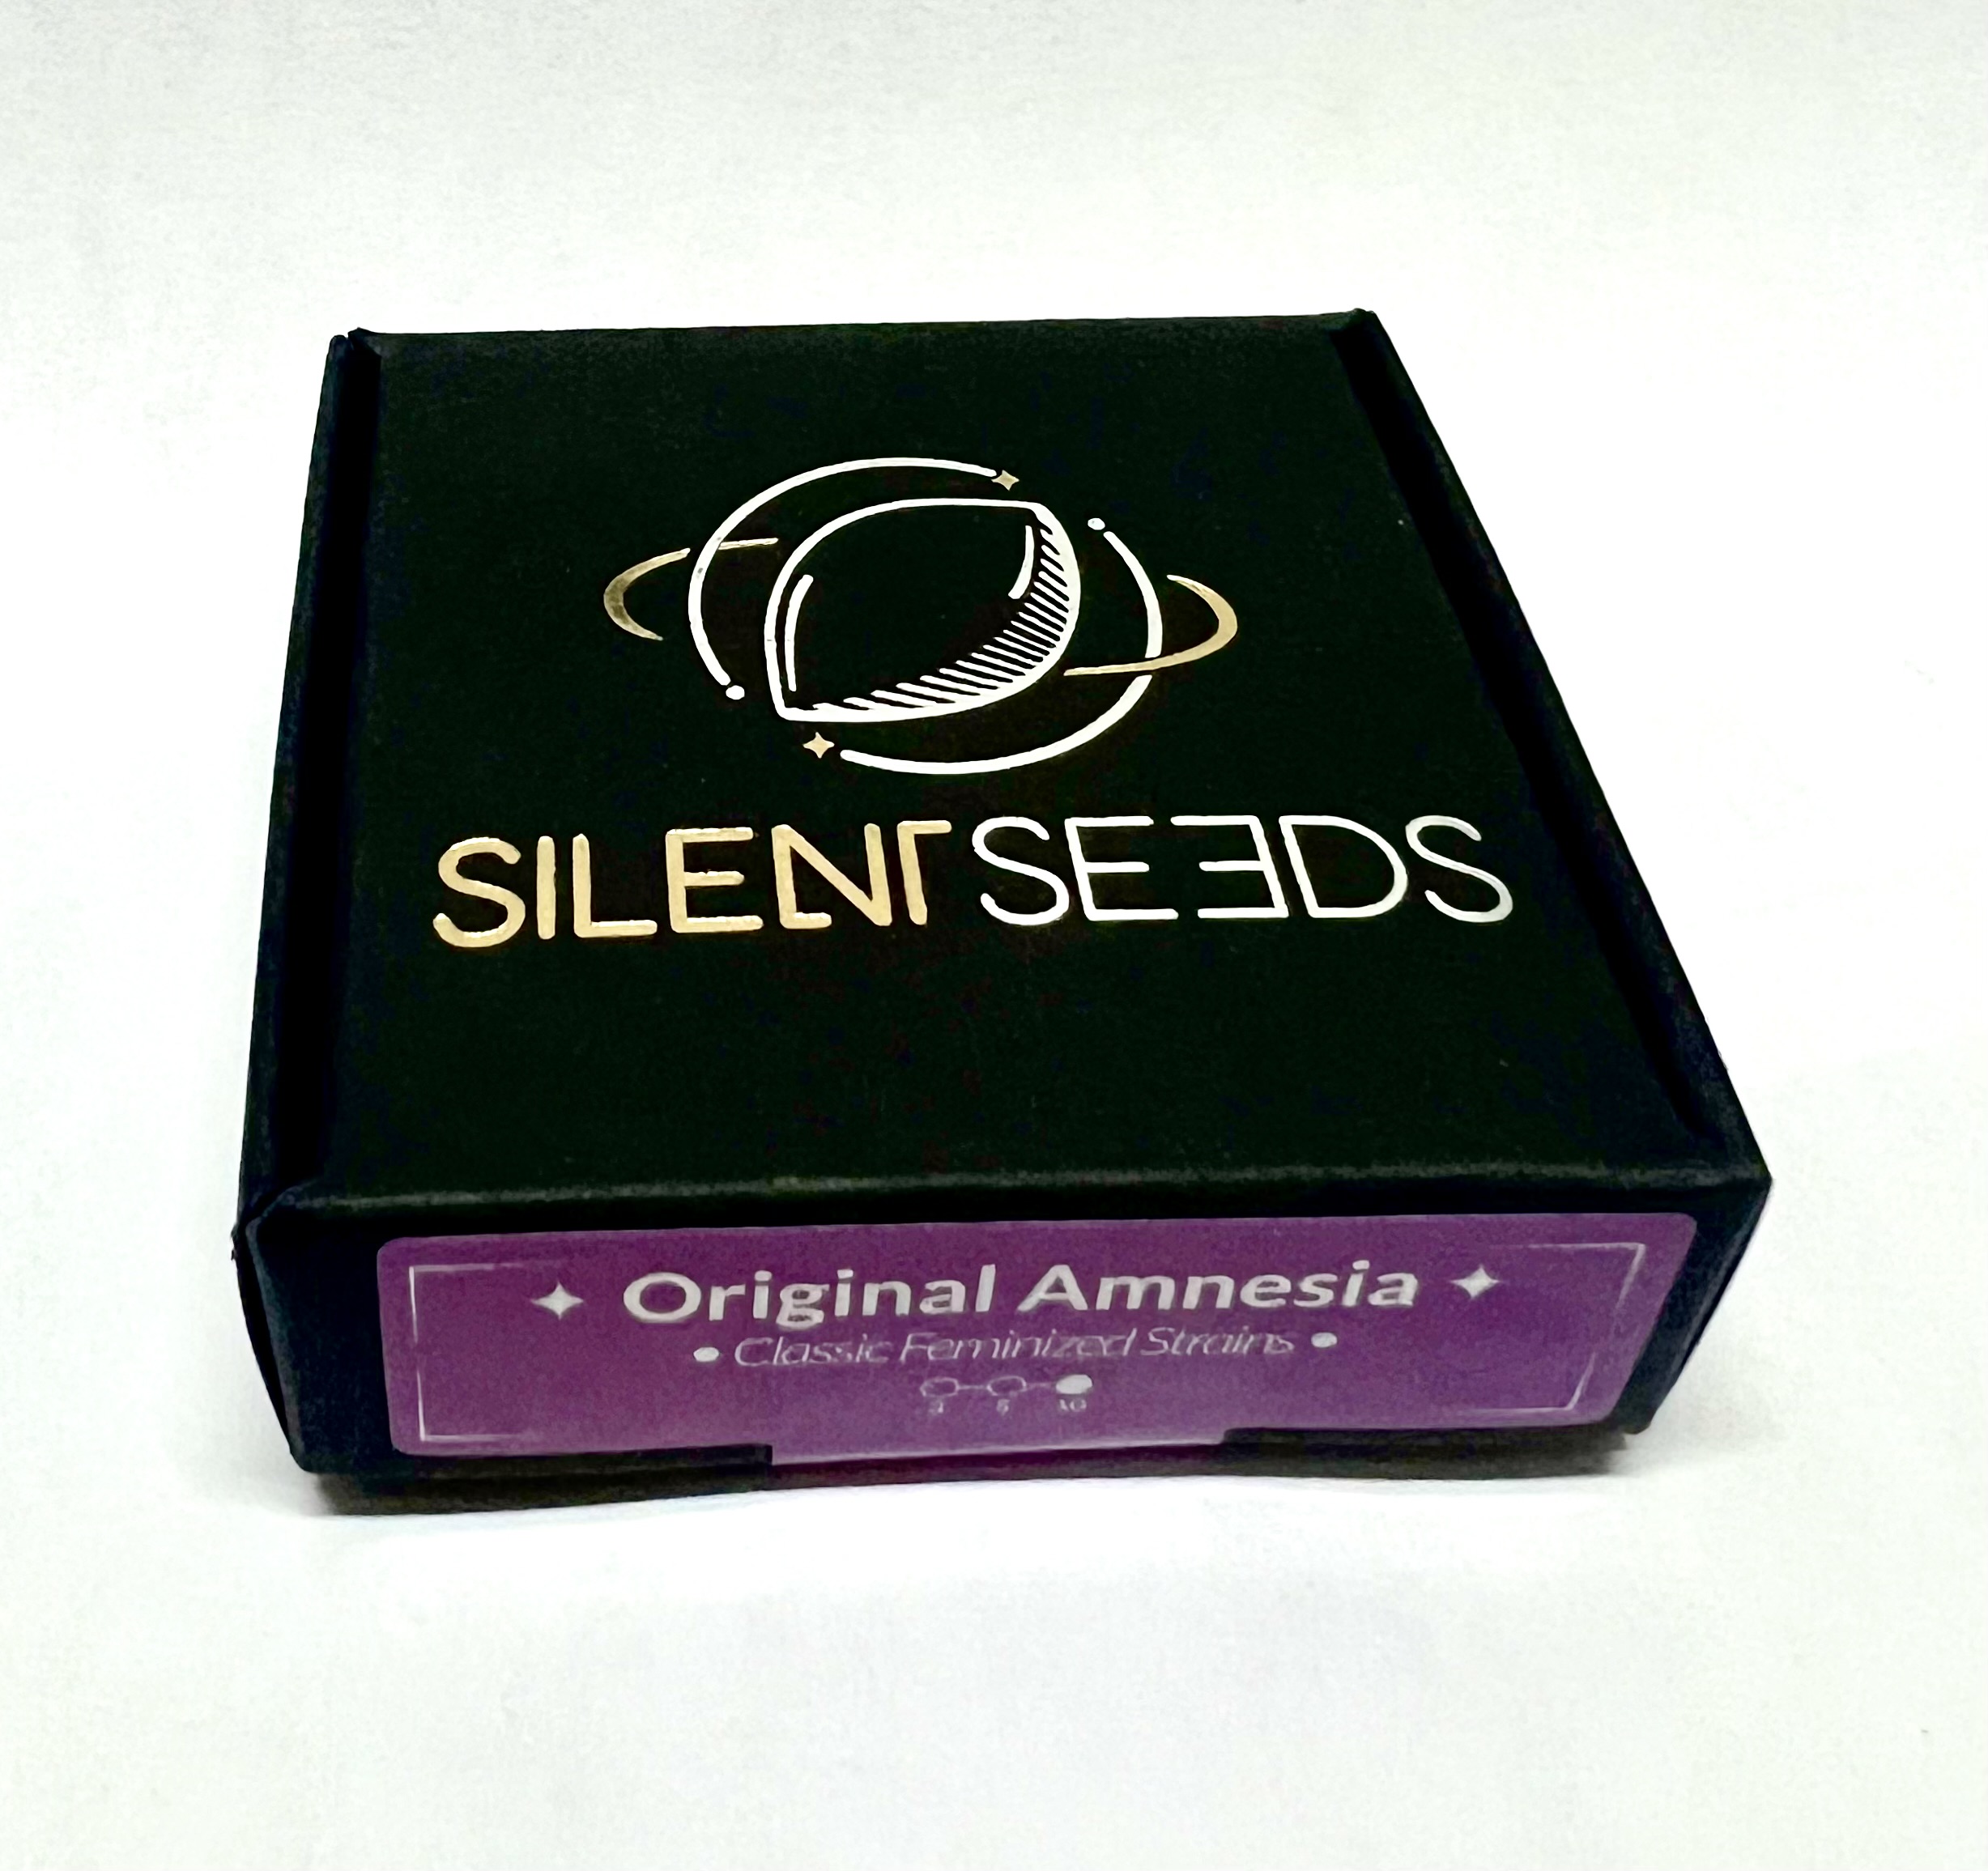 Original Amnesia - Silent seeds